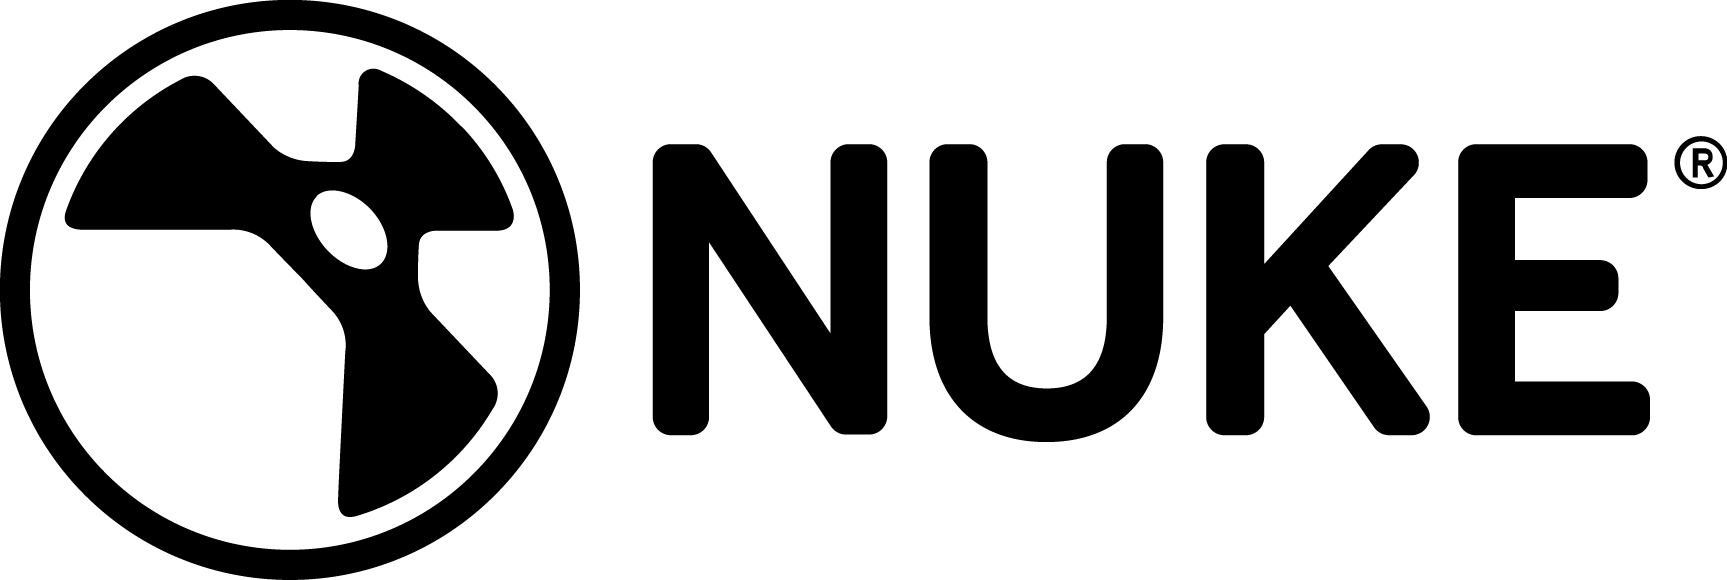 Nuke Logo (Software) png